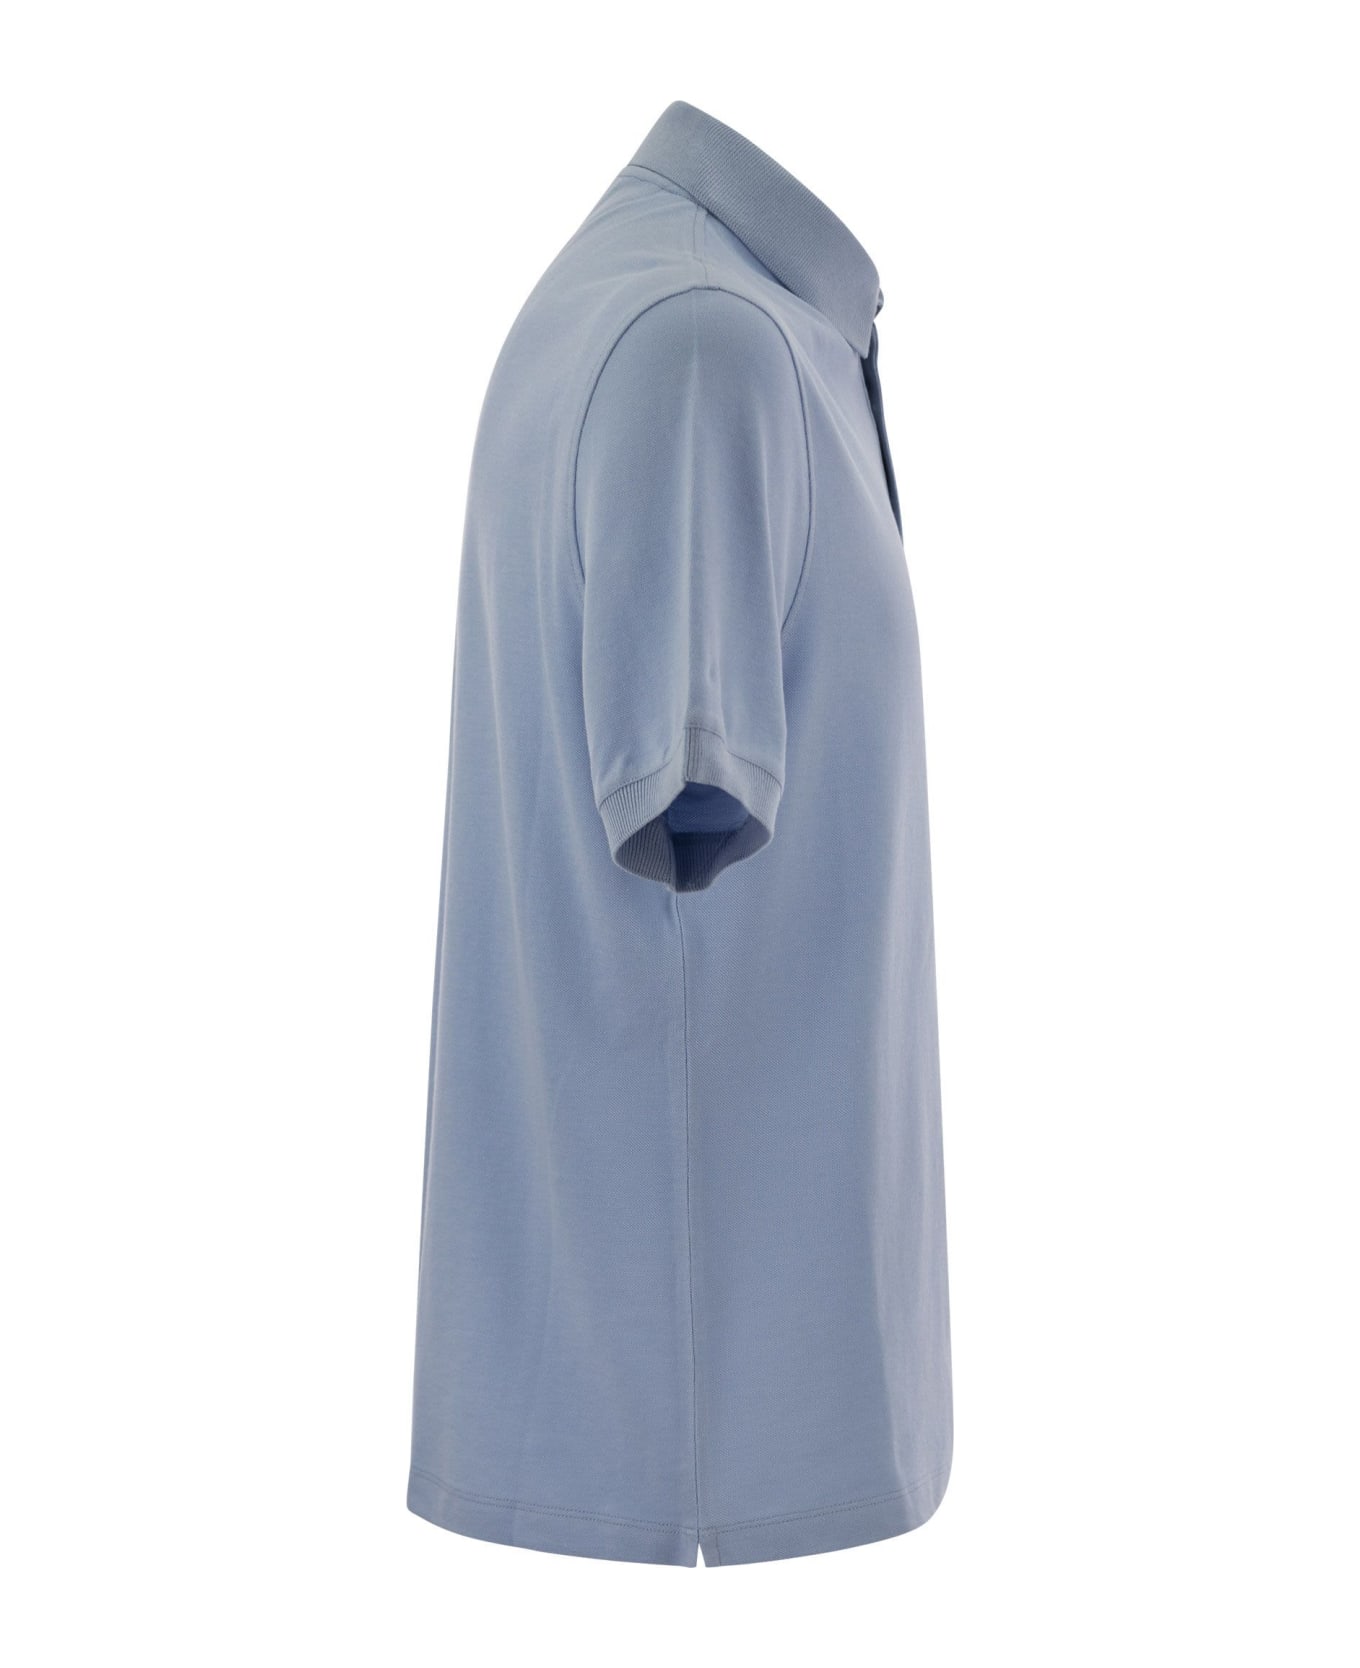 Brunello Cucinelli Cotton Jersey Polo Shirt - Light Blue